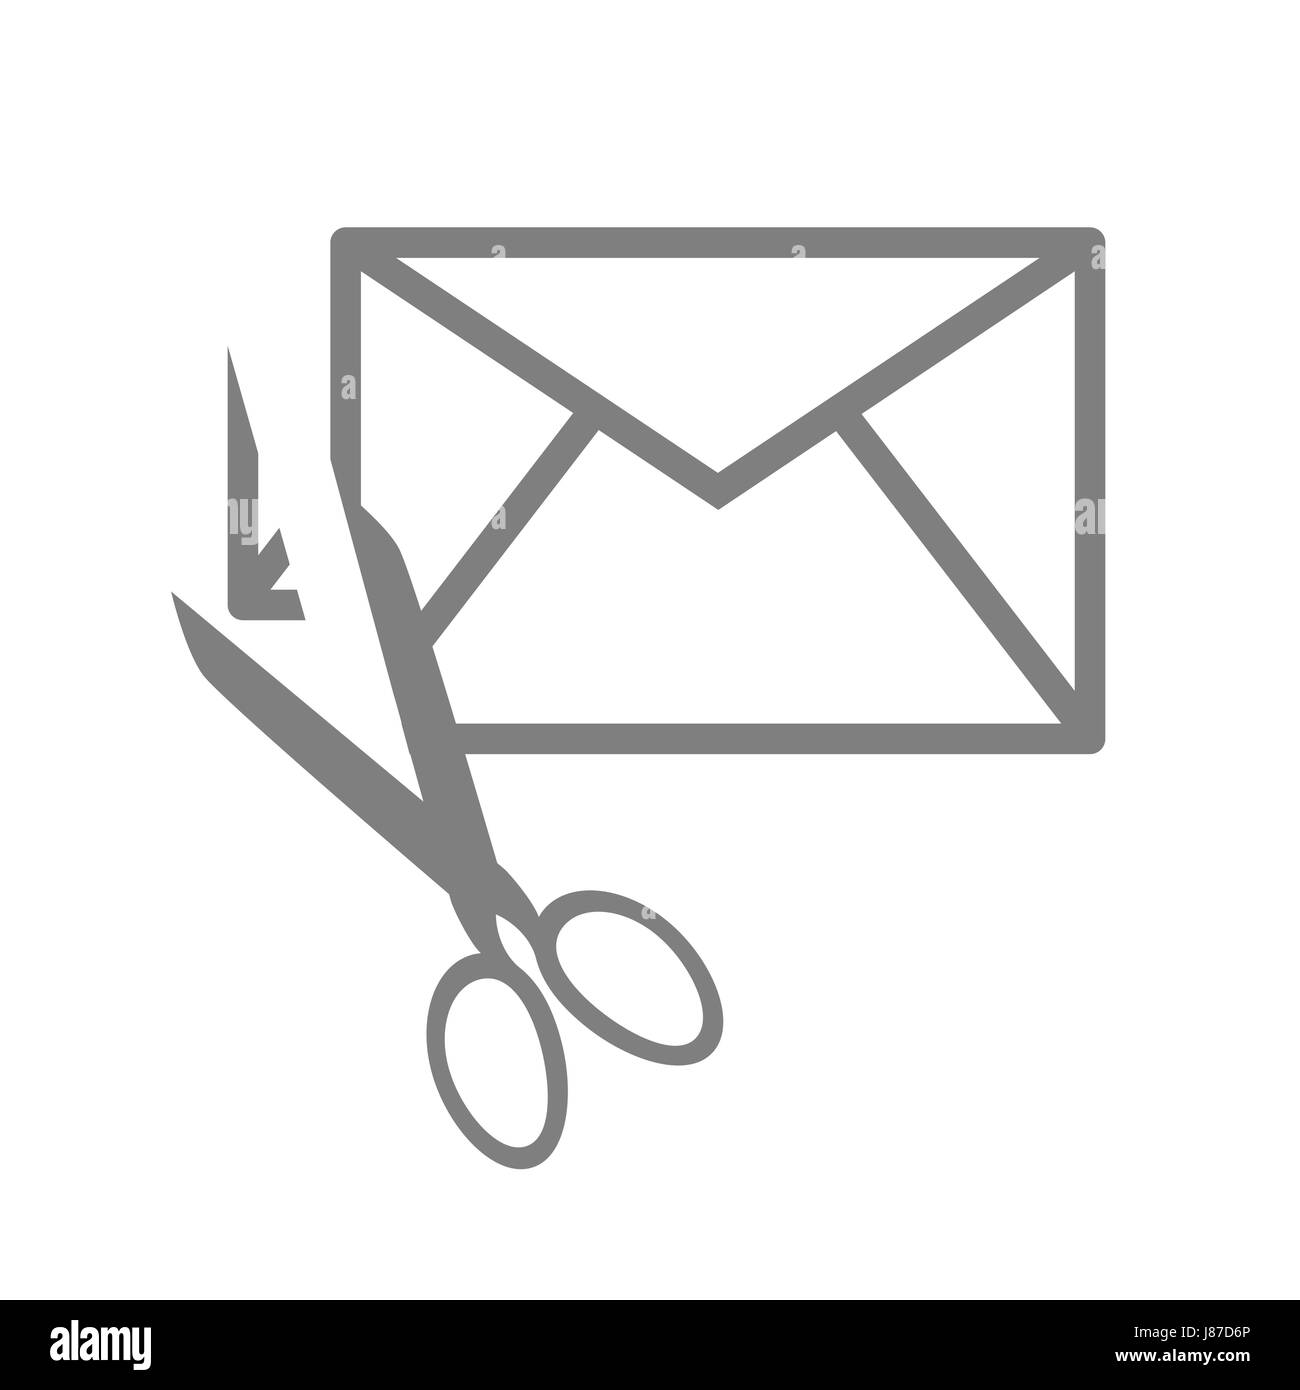 graphic, open, scissors, scissor, symbolism, letter, mail, cut, pictogram, Stock Photo